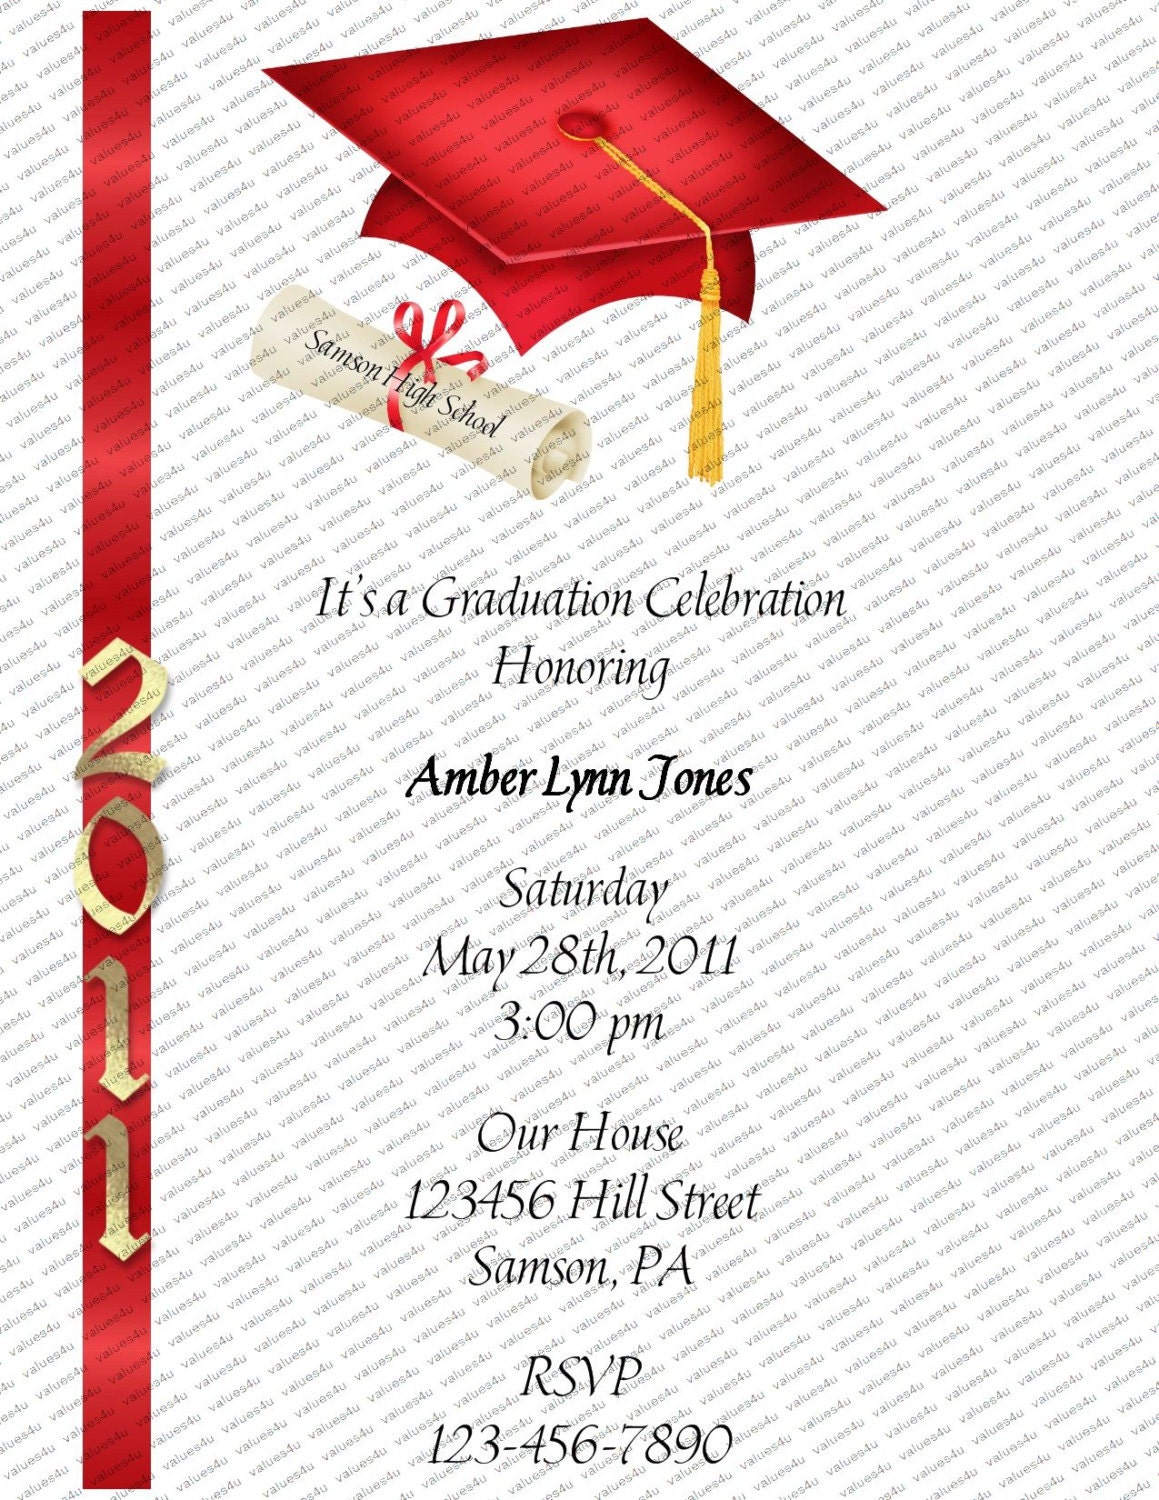 Personalized Graduation Invitations